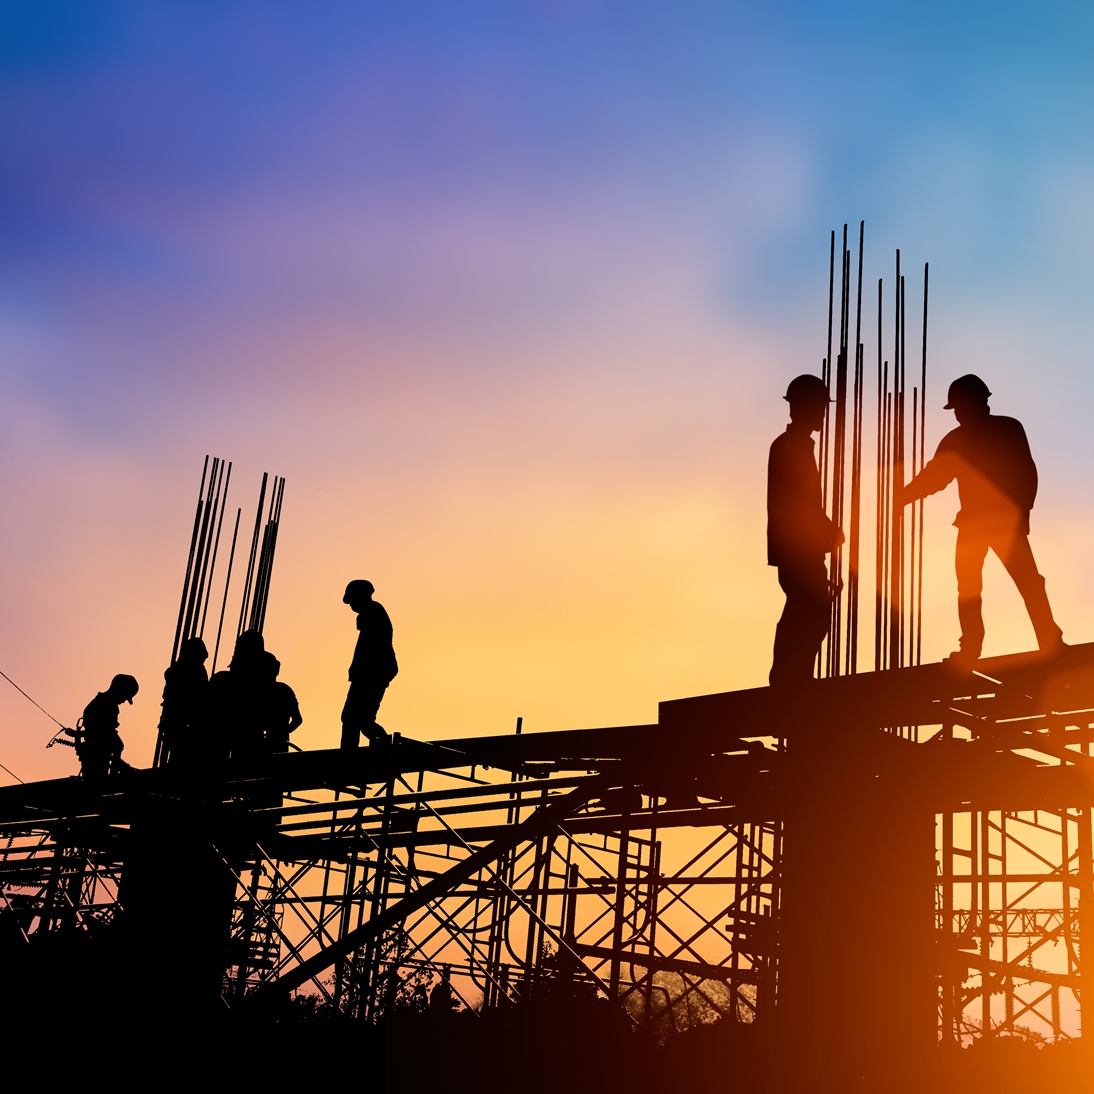 Strategies for Building Contractors to ensure industrial arrangements are Building Code 2016 compliant